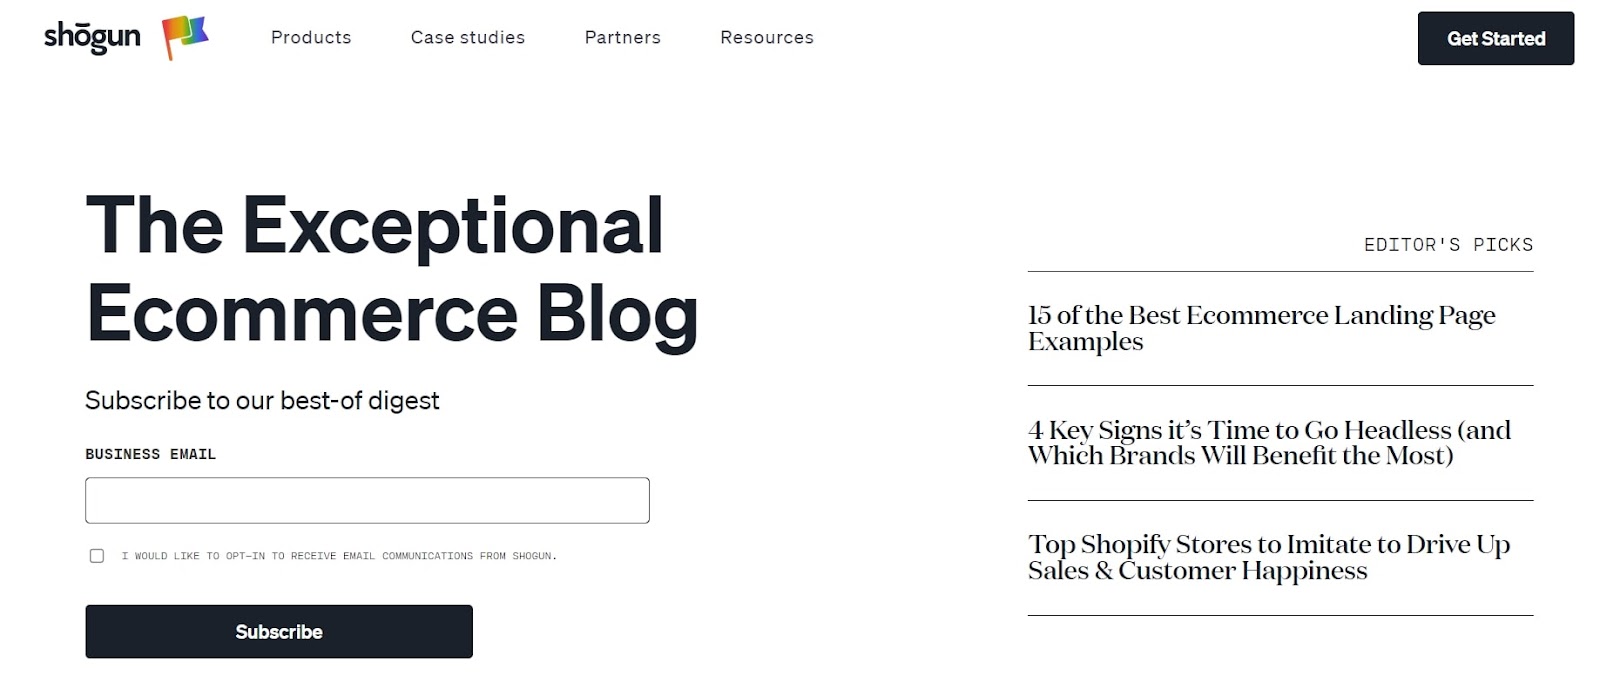 shogun exceptional ecommerce blog store design marketing tips